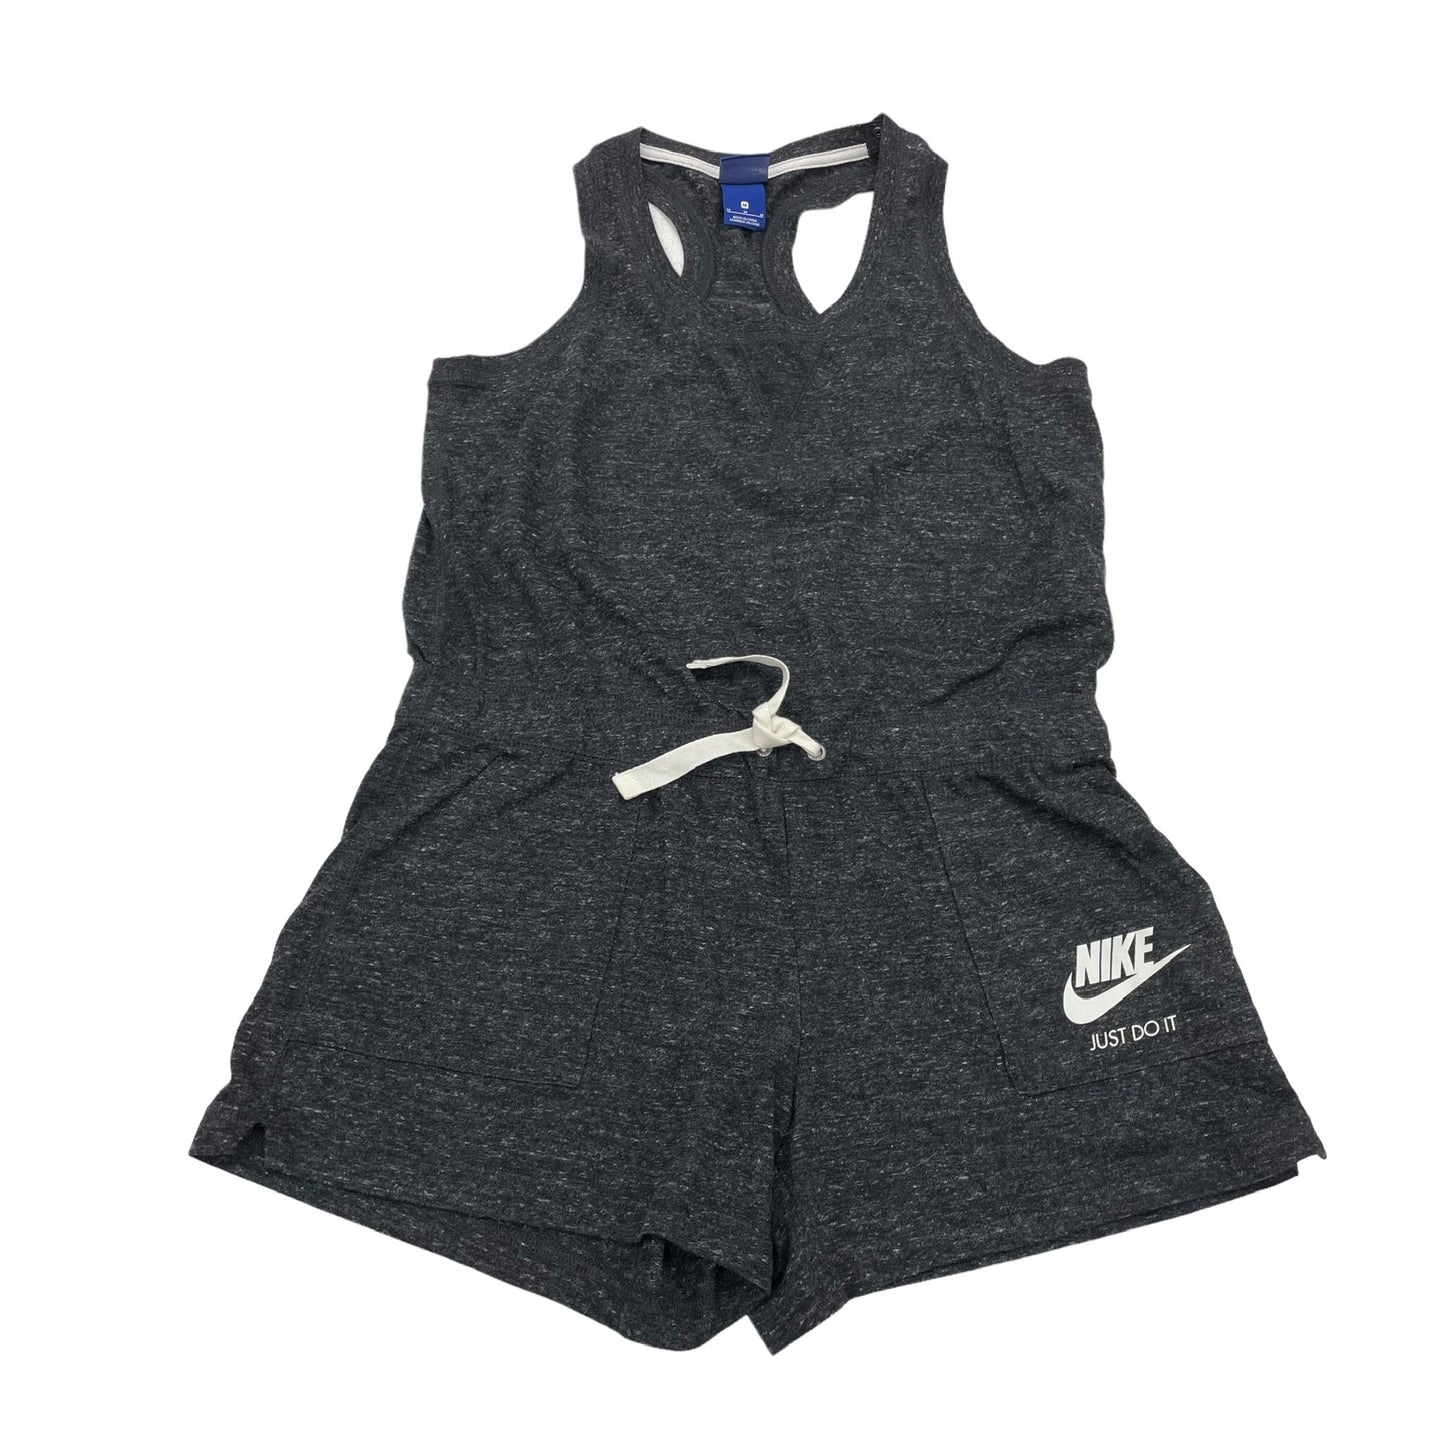 Black Athletic Dress Nike Apparel, Size M